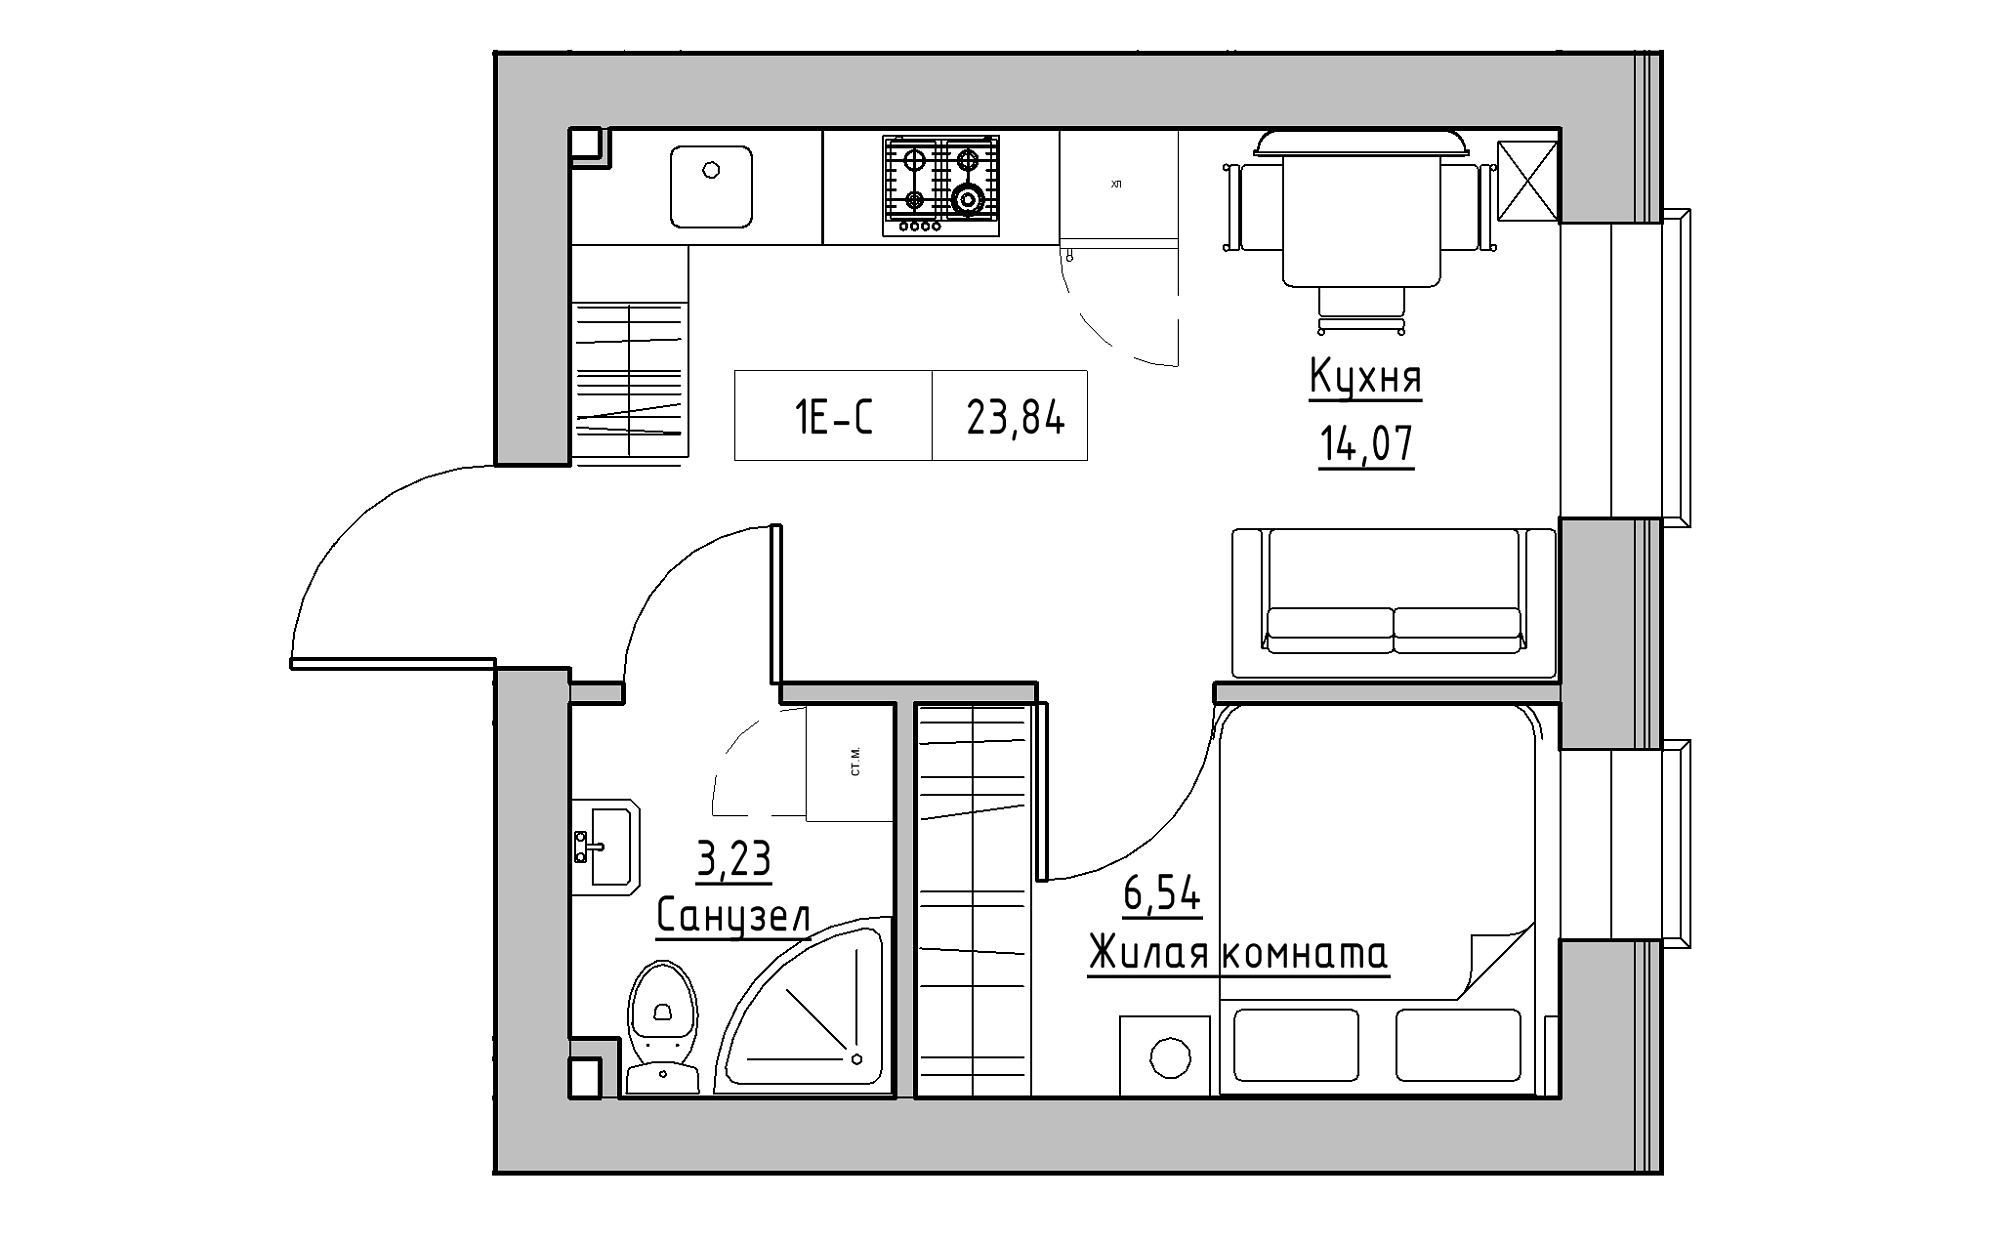 Planning 1-rm flats area 23.84m2, KS-022-04/0011.